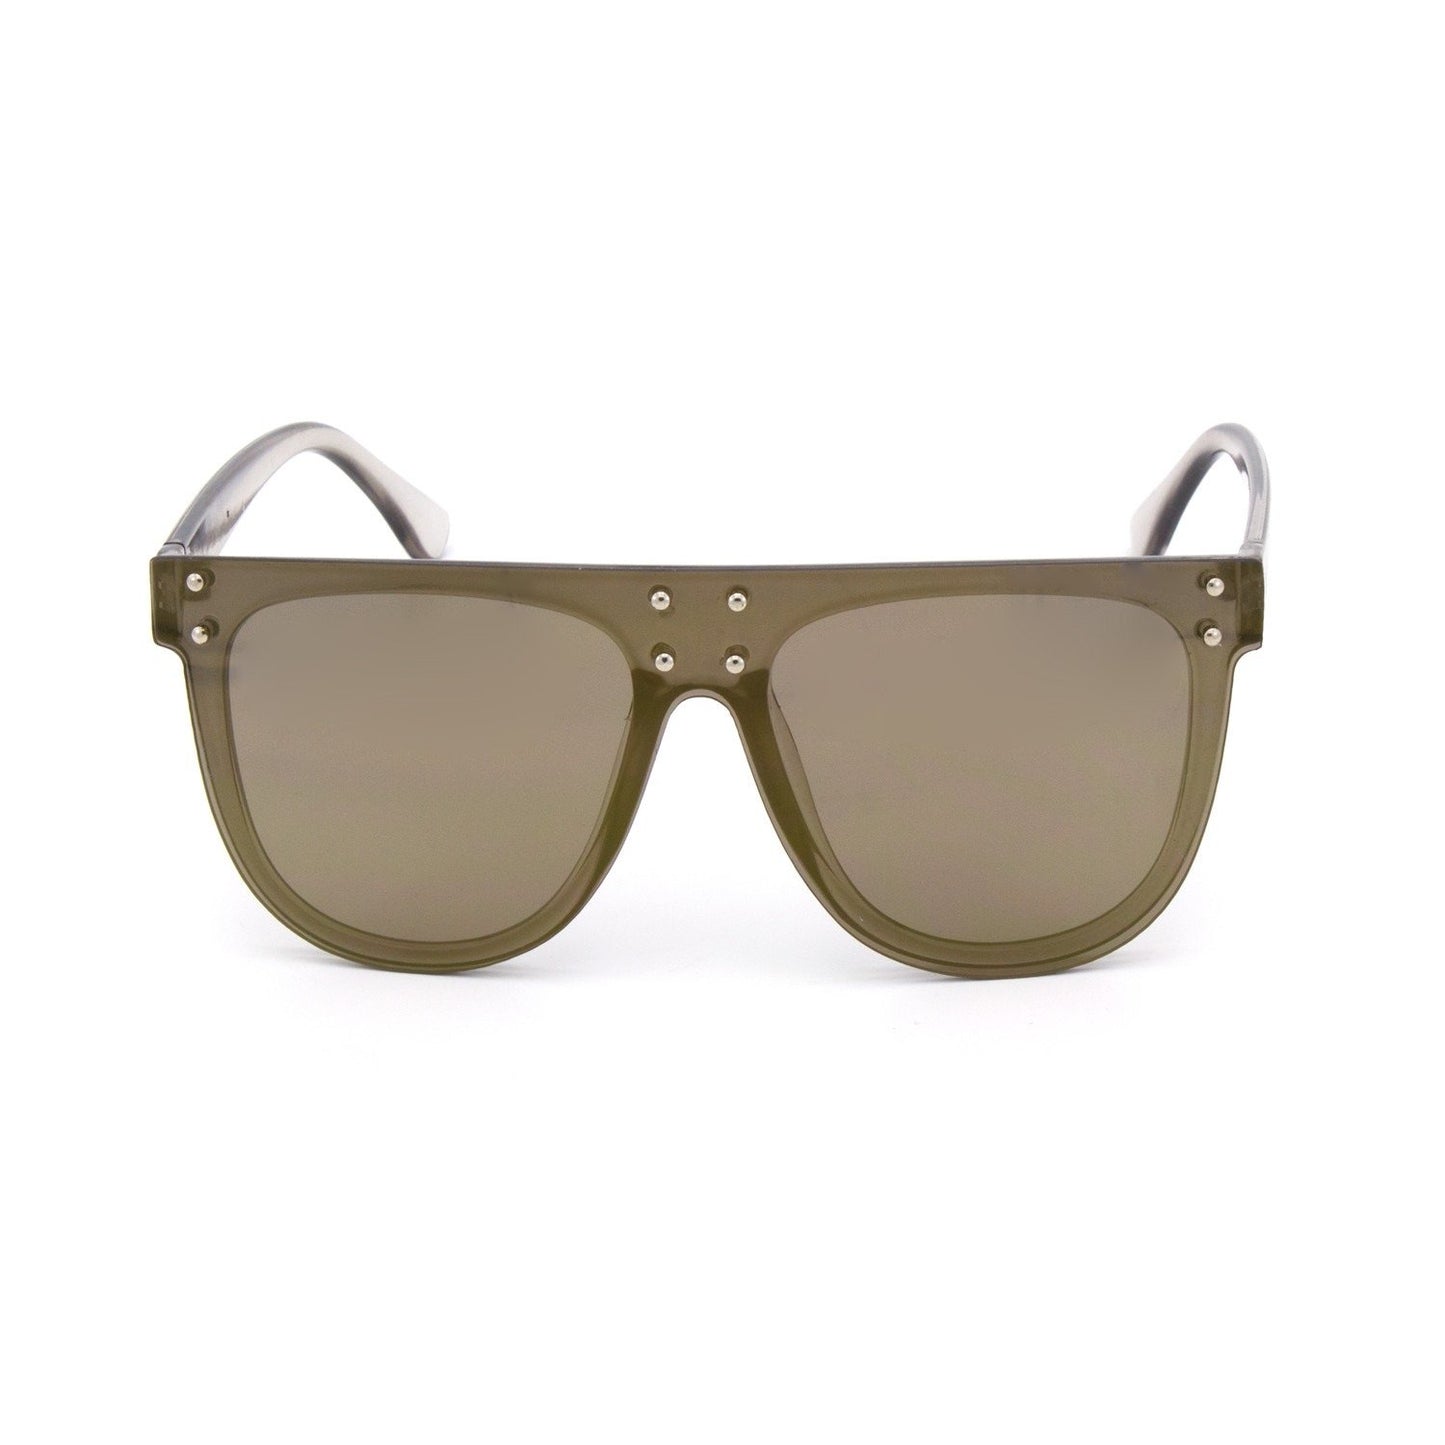 “NEW ME” Reflective Sunglasses - Weekend Shade Sunglasses